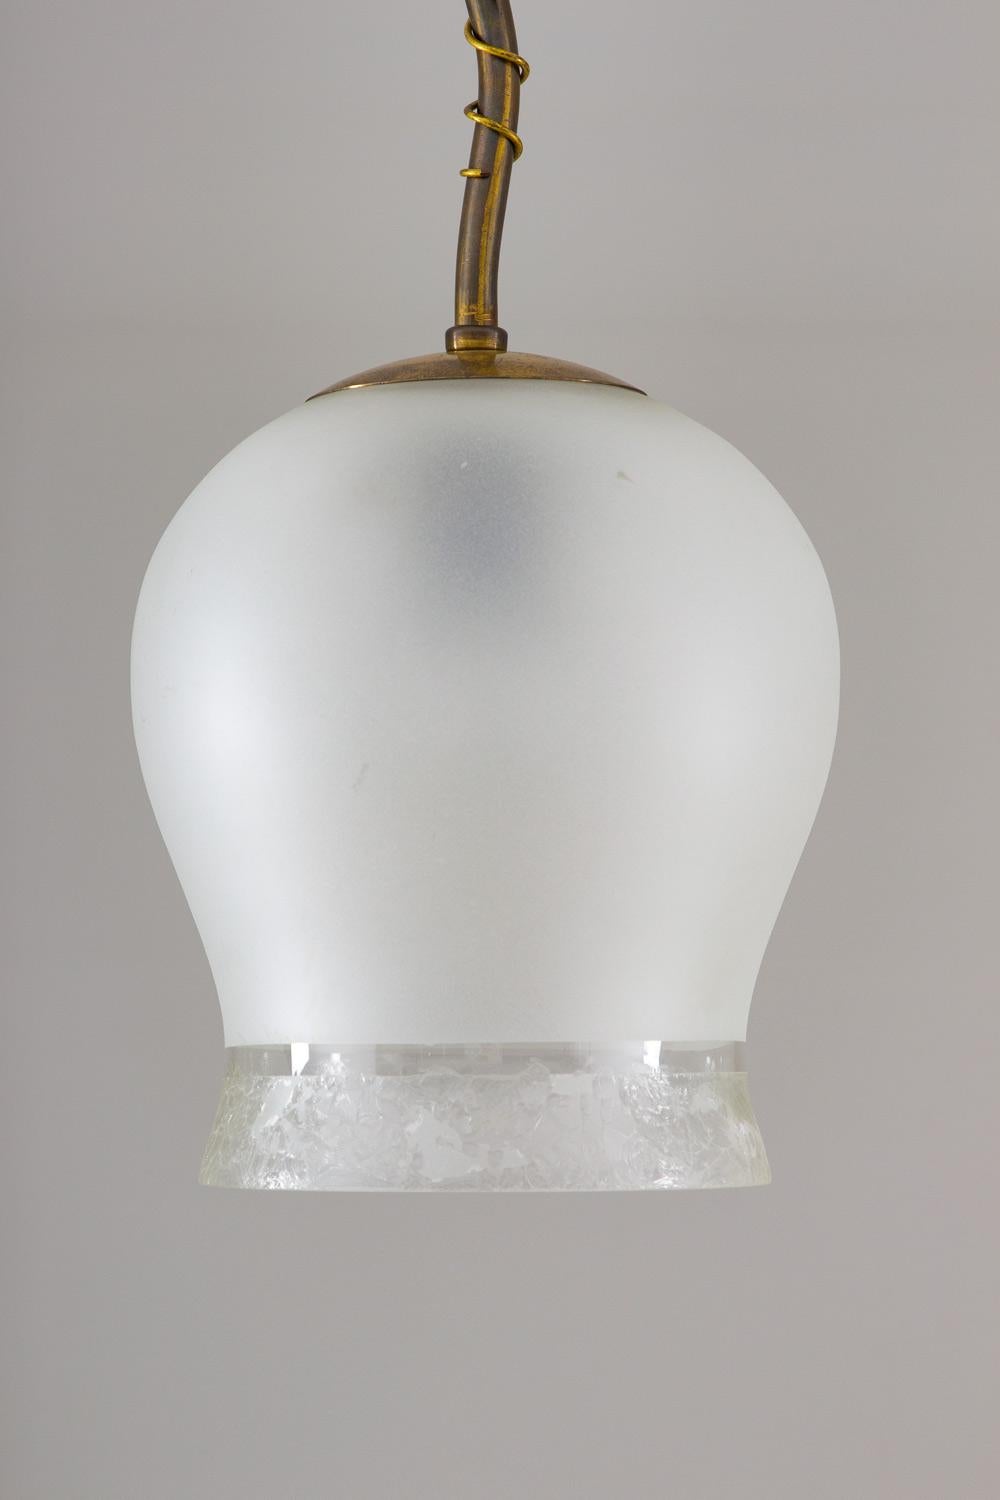 20th Century Scandinavian Pendant in Brass and Glass, Swedish Modern, 1940s